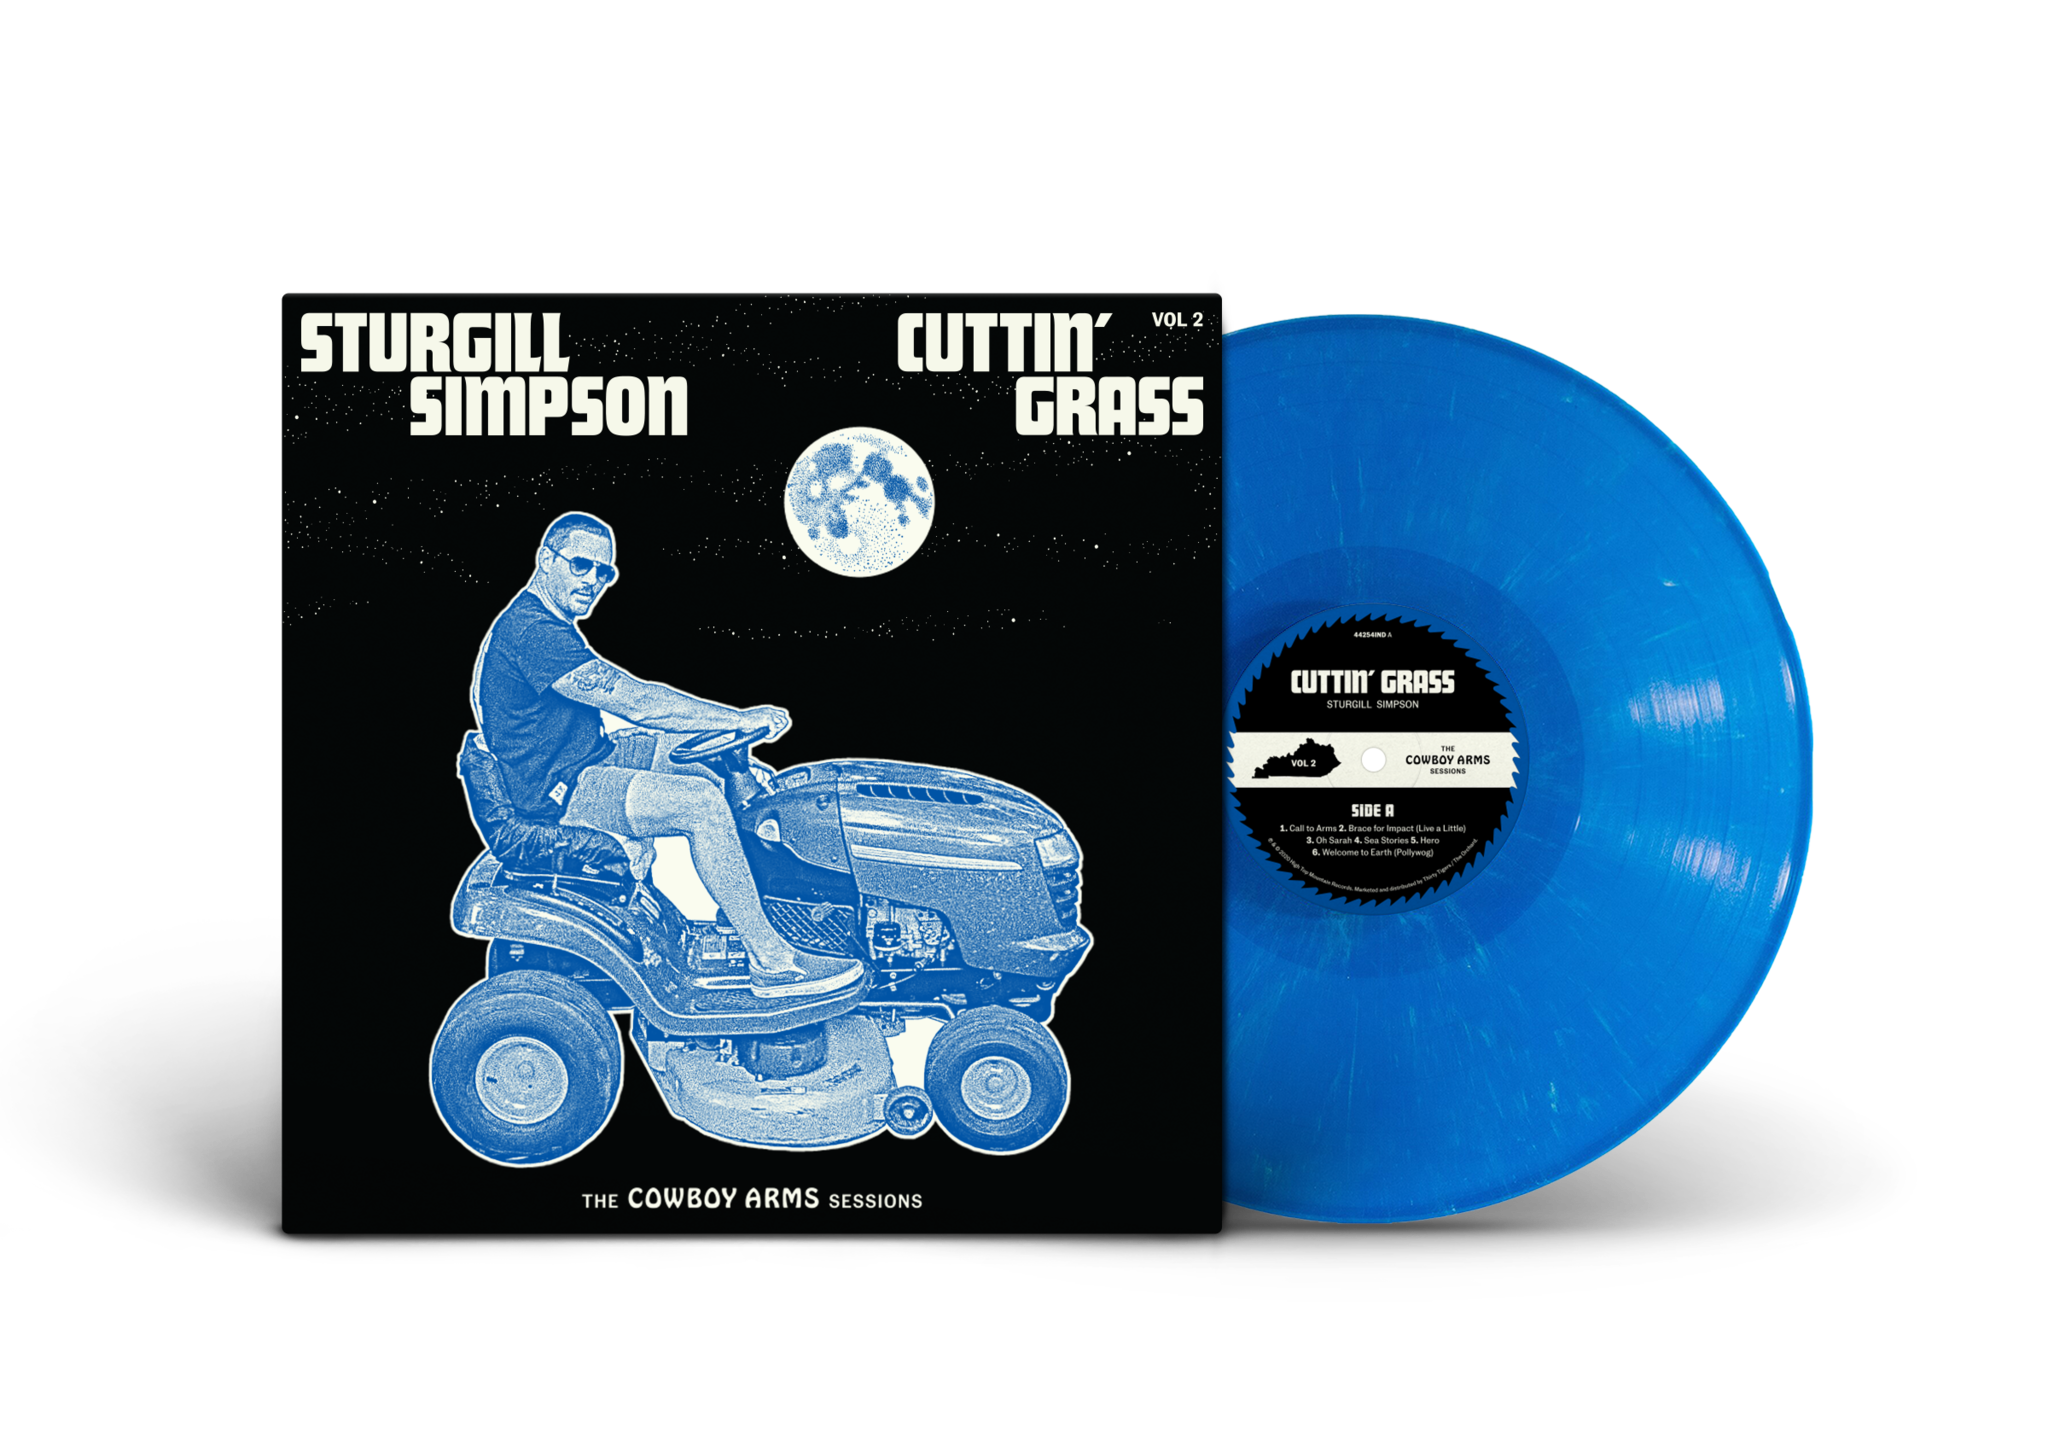 Sturgill Simpson Cuttin' Grass Vol. 2 Vinyl